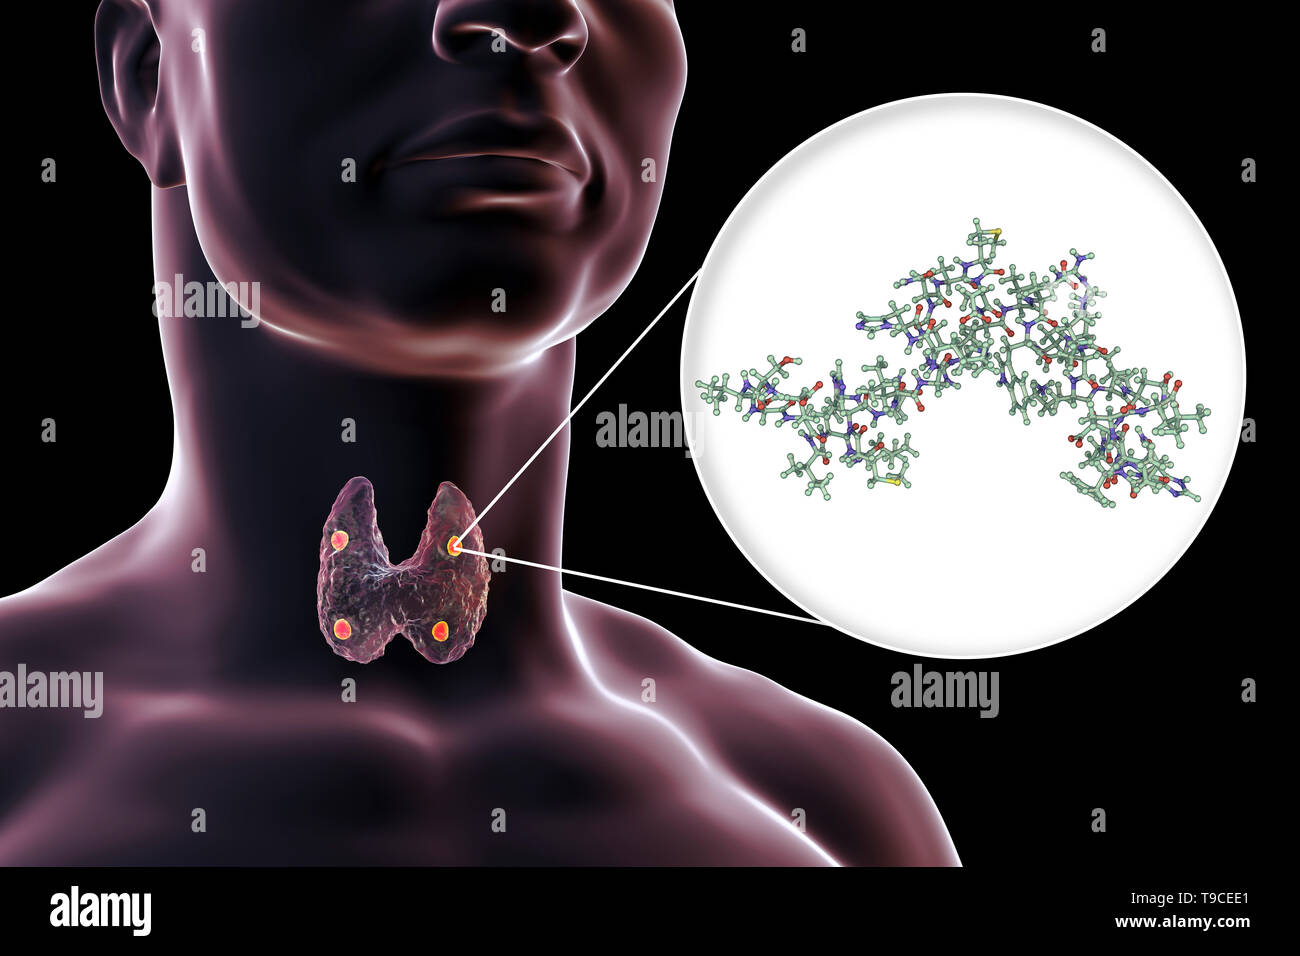 Parathyroid glands and parathyroid hormone, illustration Stock Photo